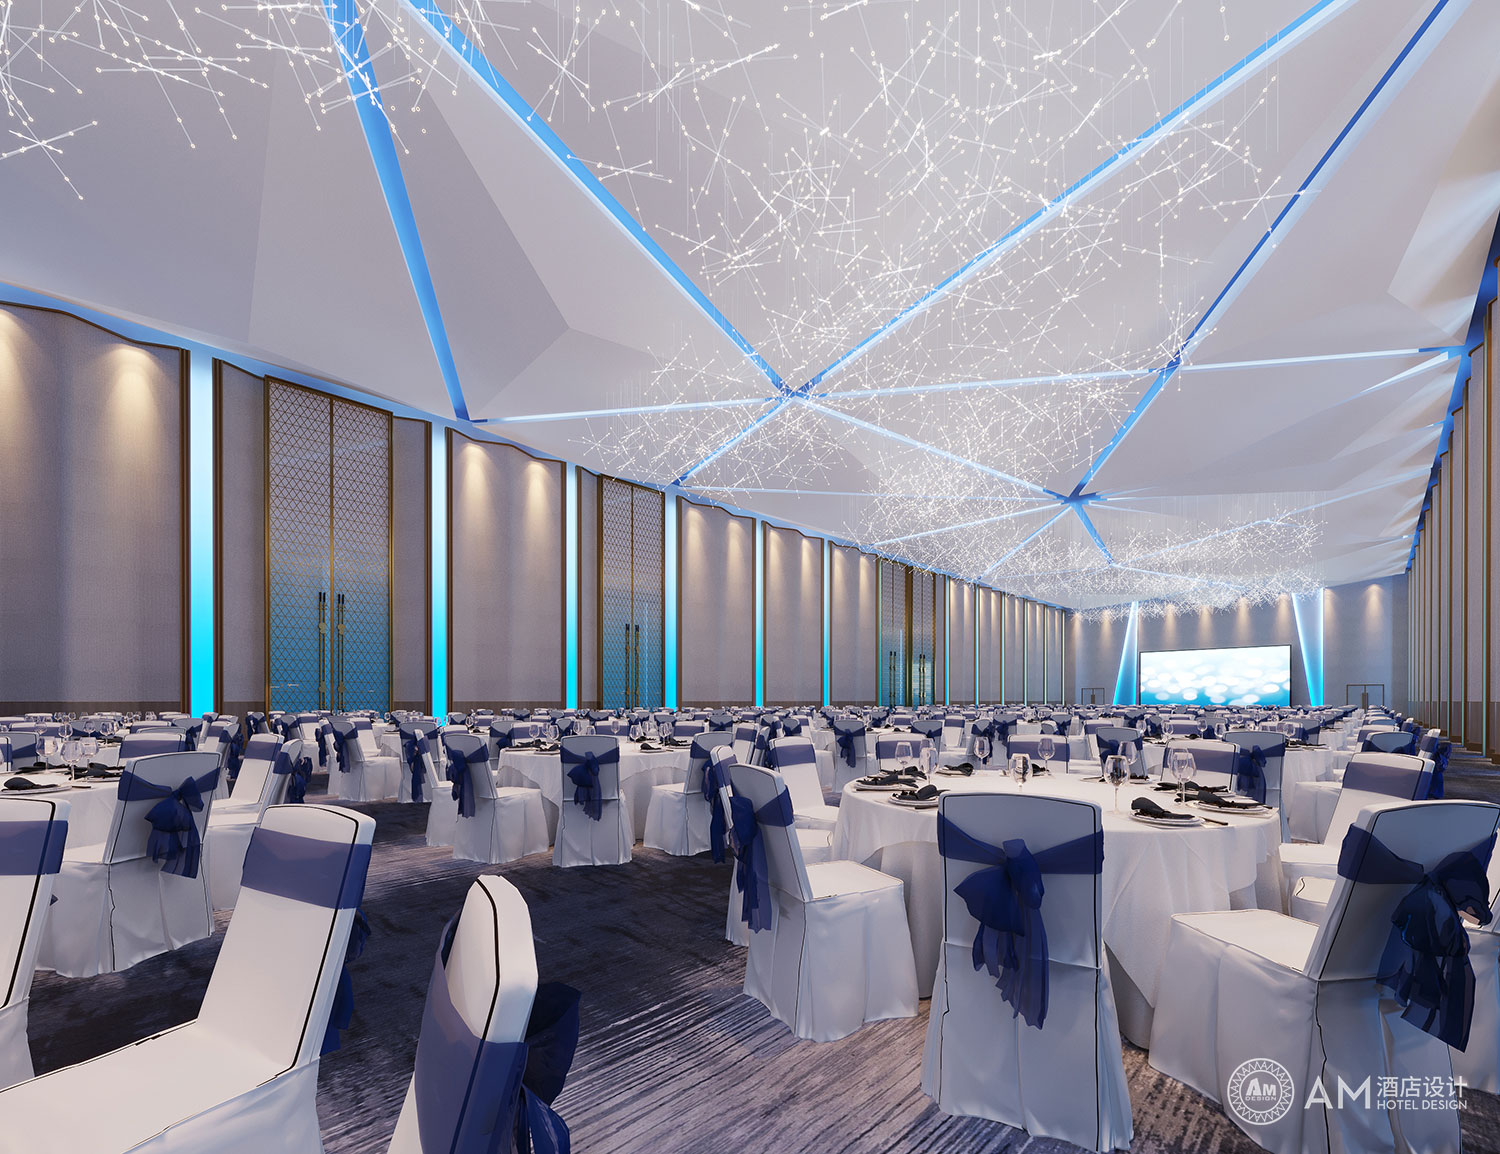 AM DESIGN | Ballroom Design of Liaoning Wanwan Hotel